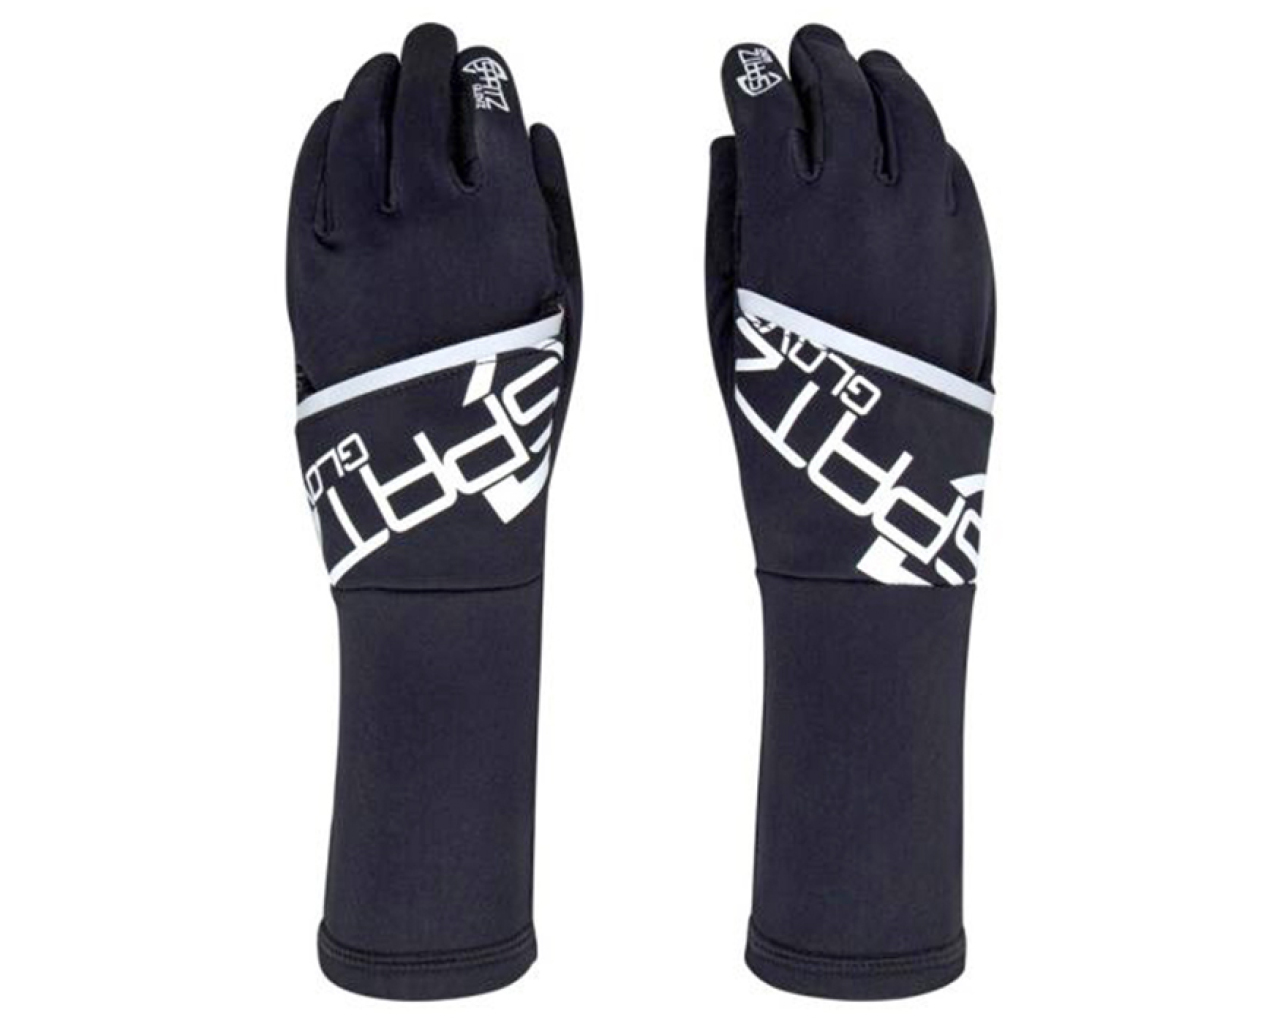 Spatz Glovz Race Gloves | Merlin Cycles